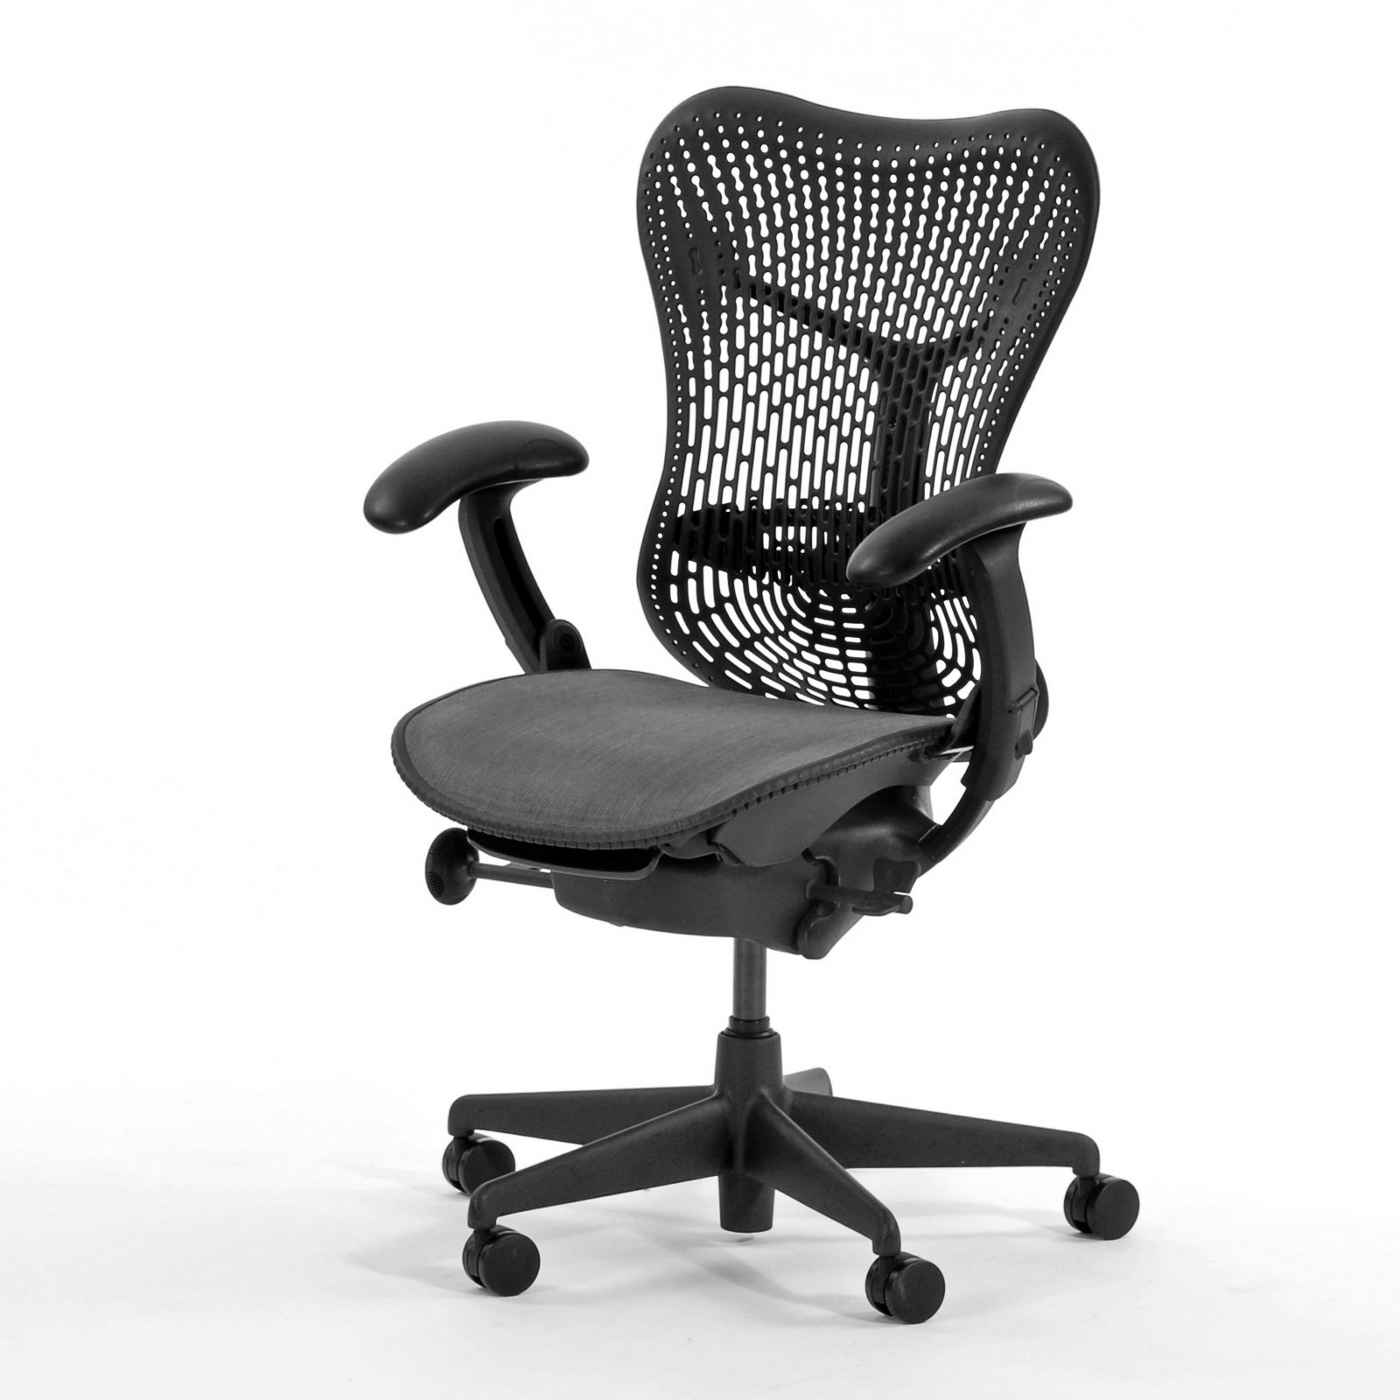 ergonomic office chairs full size of office furniture:elegant ergonomic desk chair pertaining to office JEYGLOH